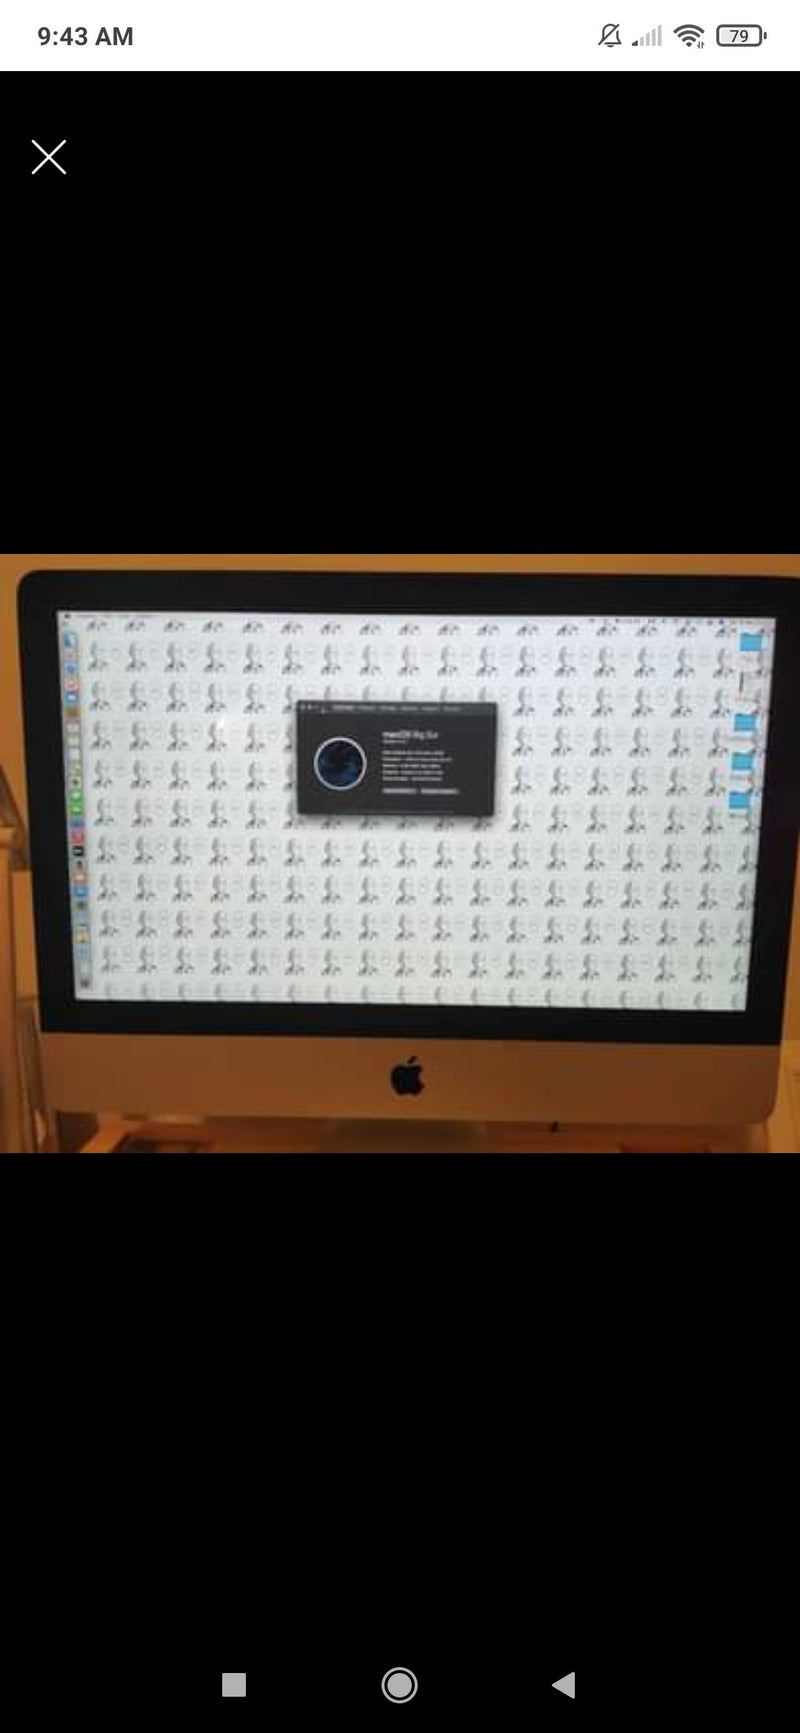 iMac 21.5" Retina 4k 1 TB Perfetto